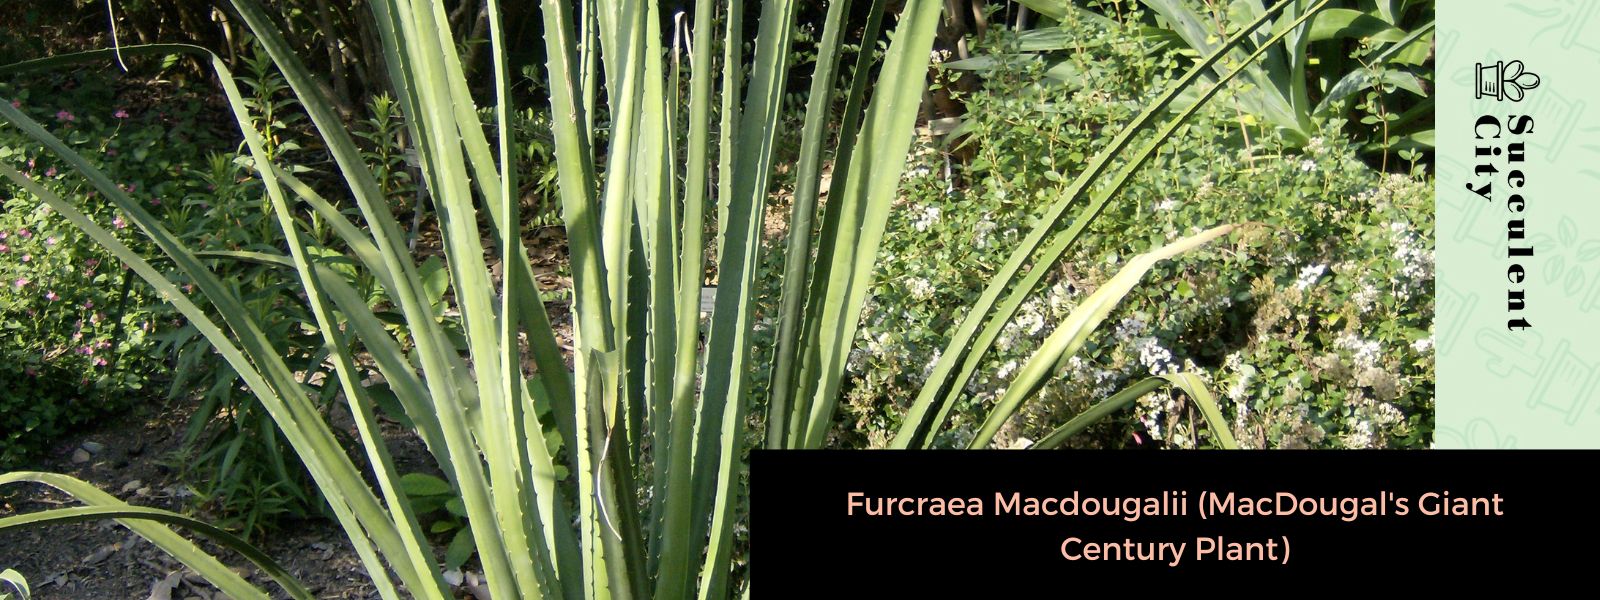 Furcraea Macdougalii (Planta del siglo gigante de MacDougal)